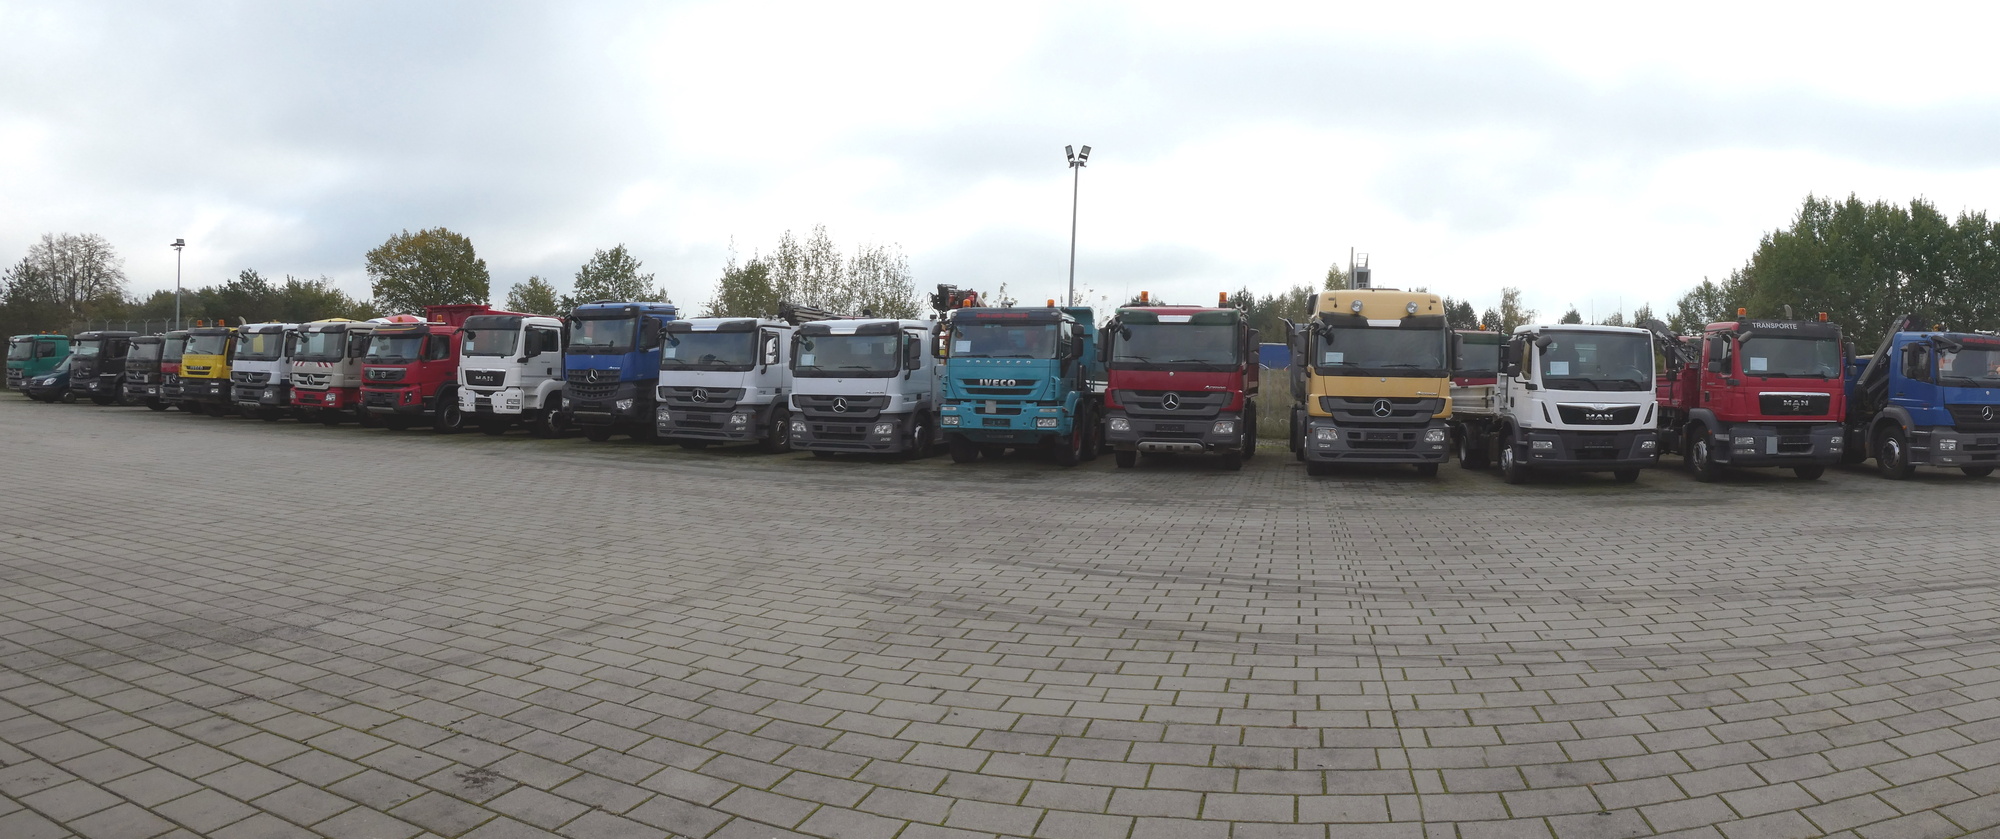 Henze Truck GmbH - Комунални/ Специјални возила undefined: слика 1